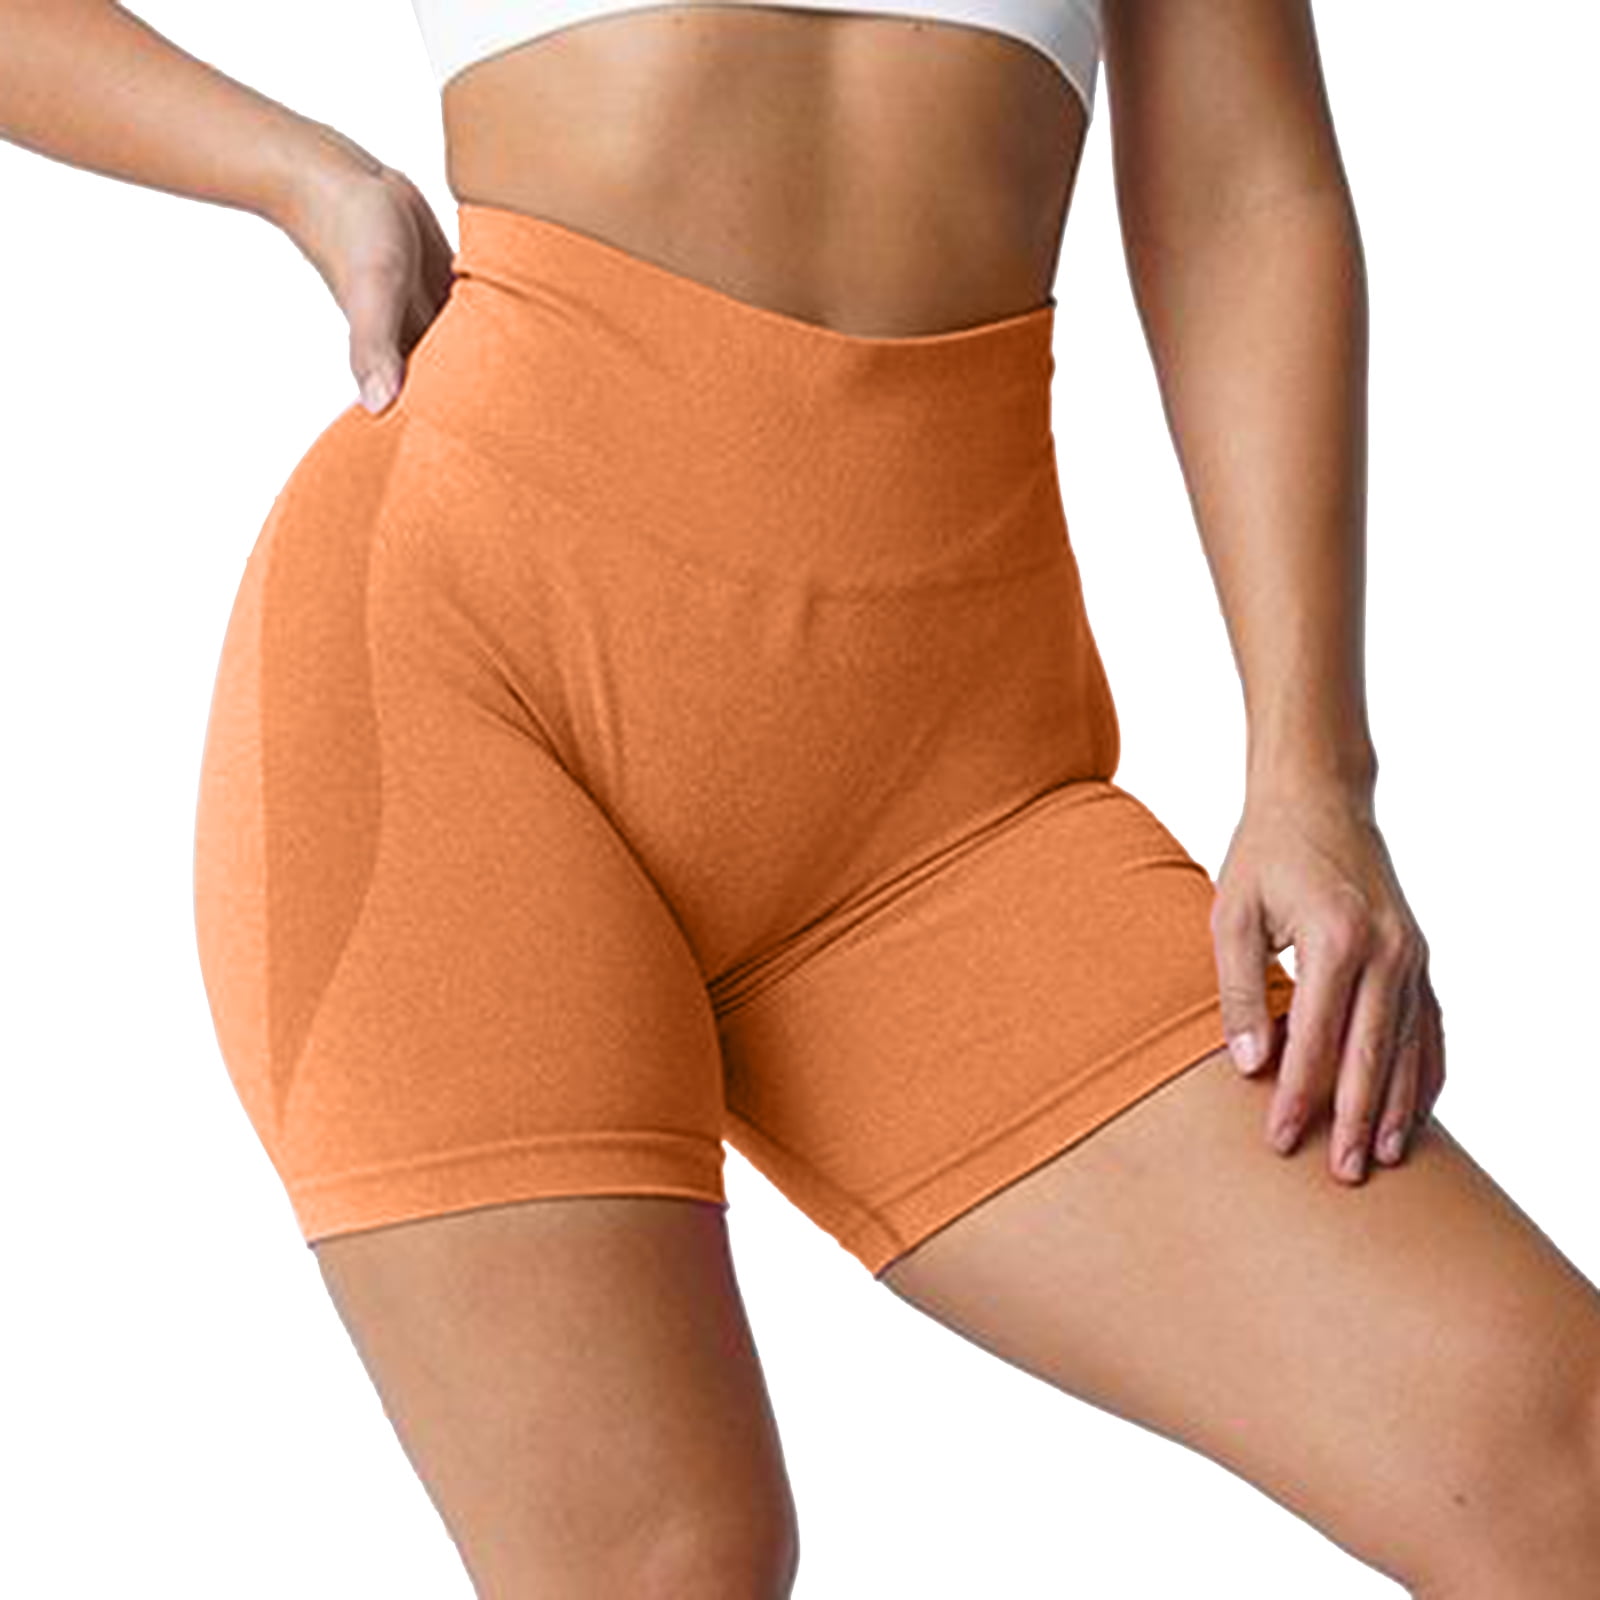 adviicd Yoga Pants For Girls Yoga Clothes High Waist Biker pants for Women  No Front Seam Soft Yoga Workout Gym Bike pants Tummy Control Squat Proof  Pink S 